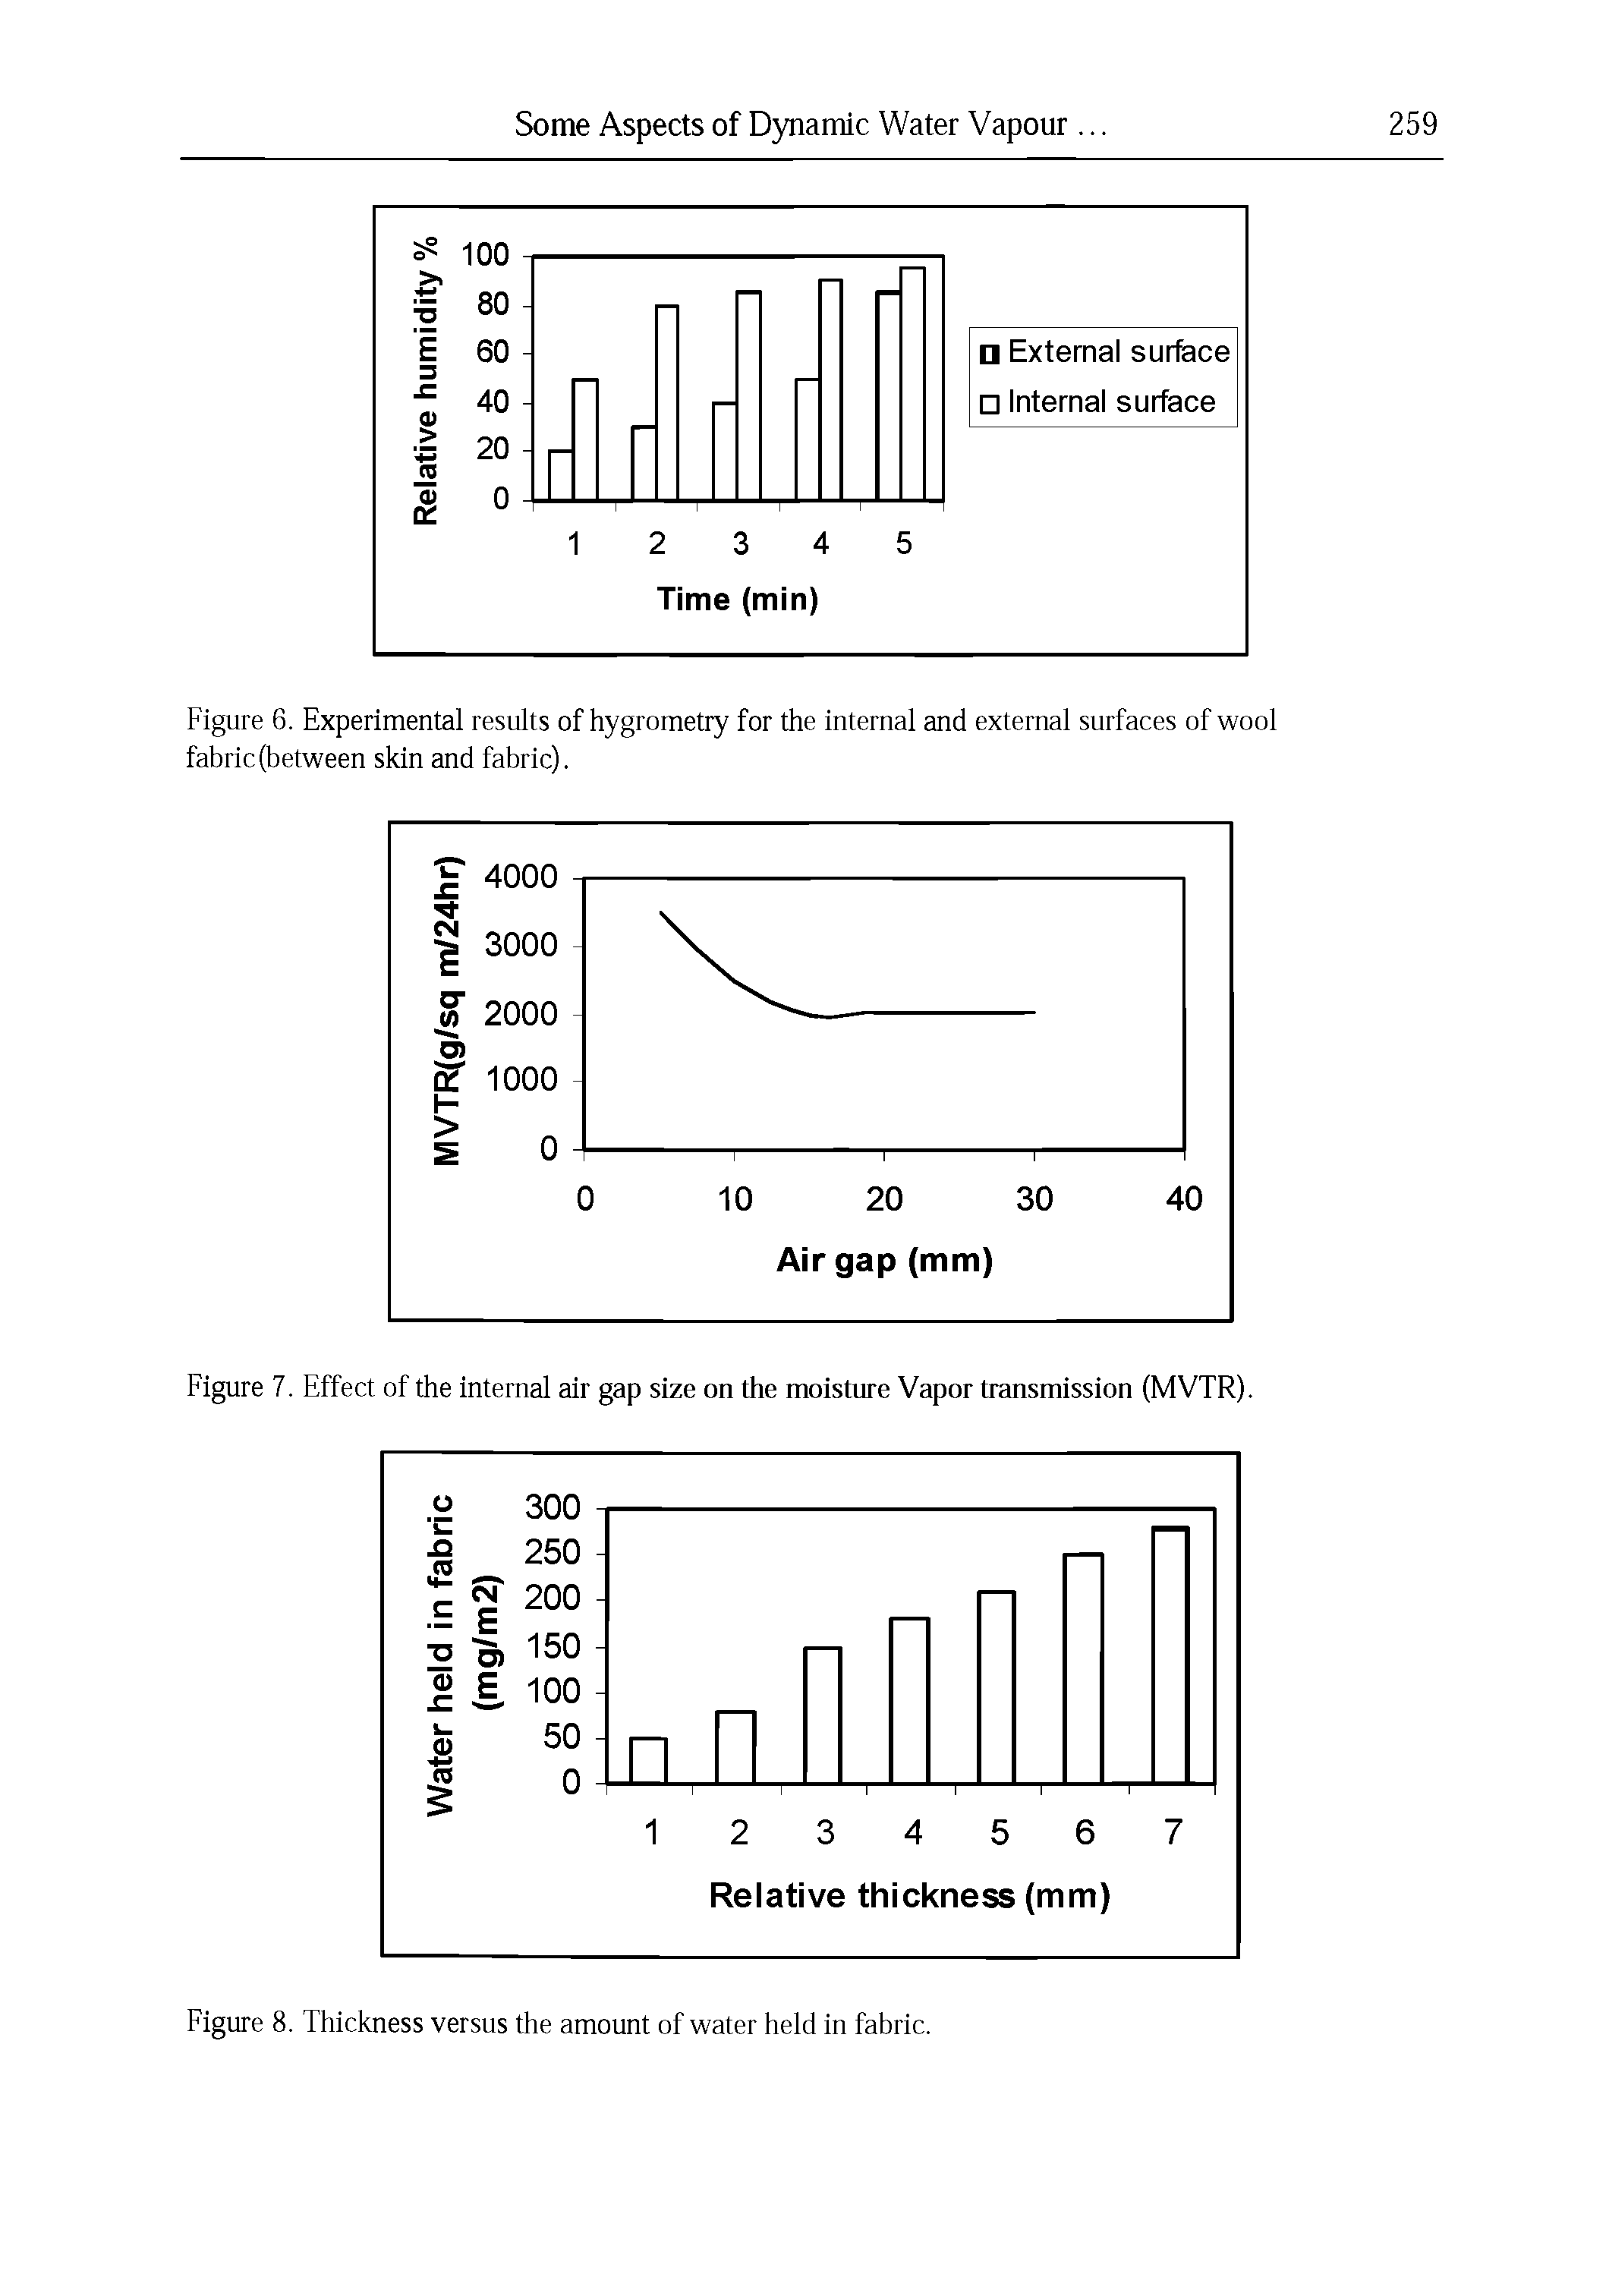 Figure 7. Effect of the internal air gap size on the moisture Vapor transmission (MVTR).